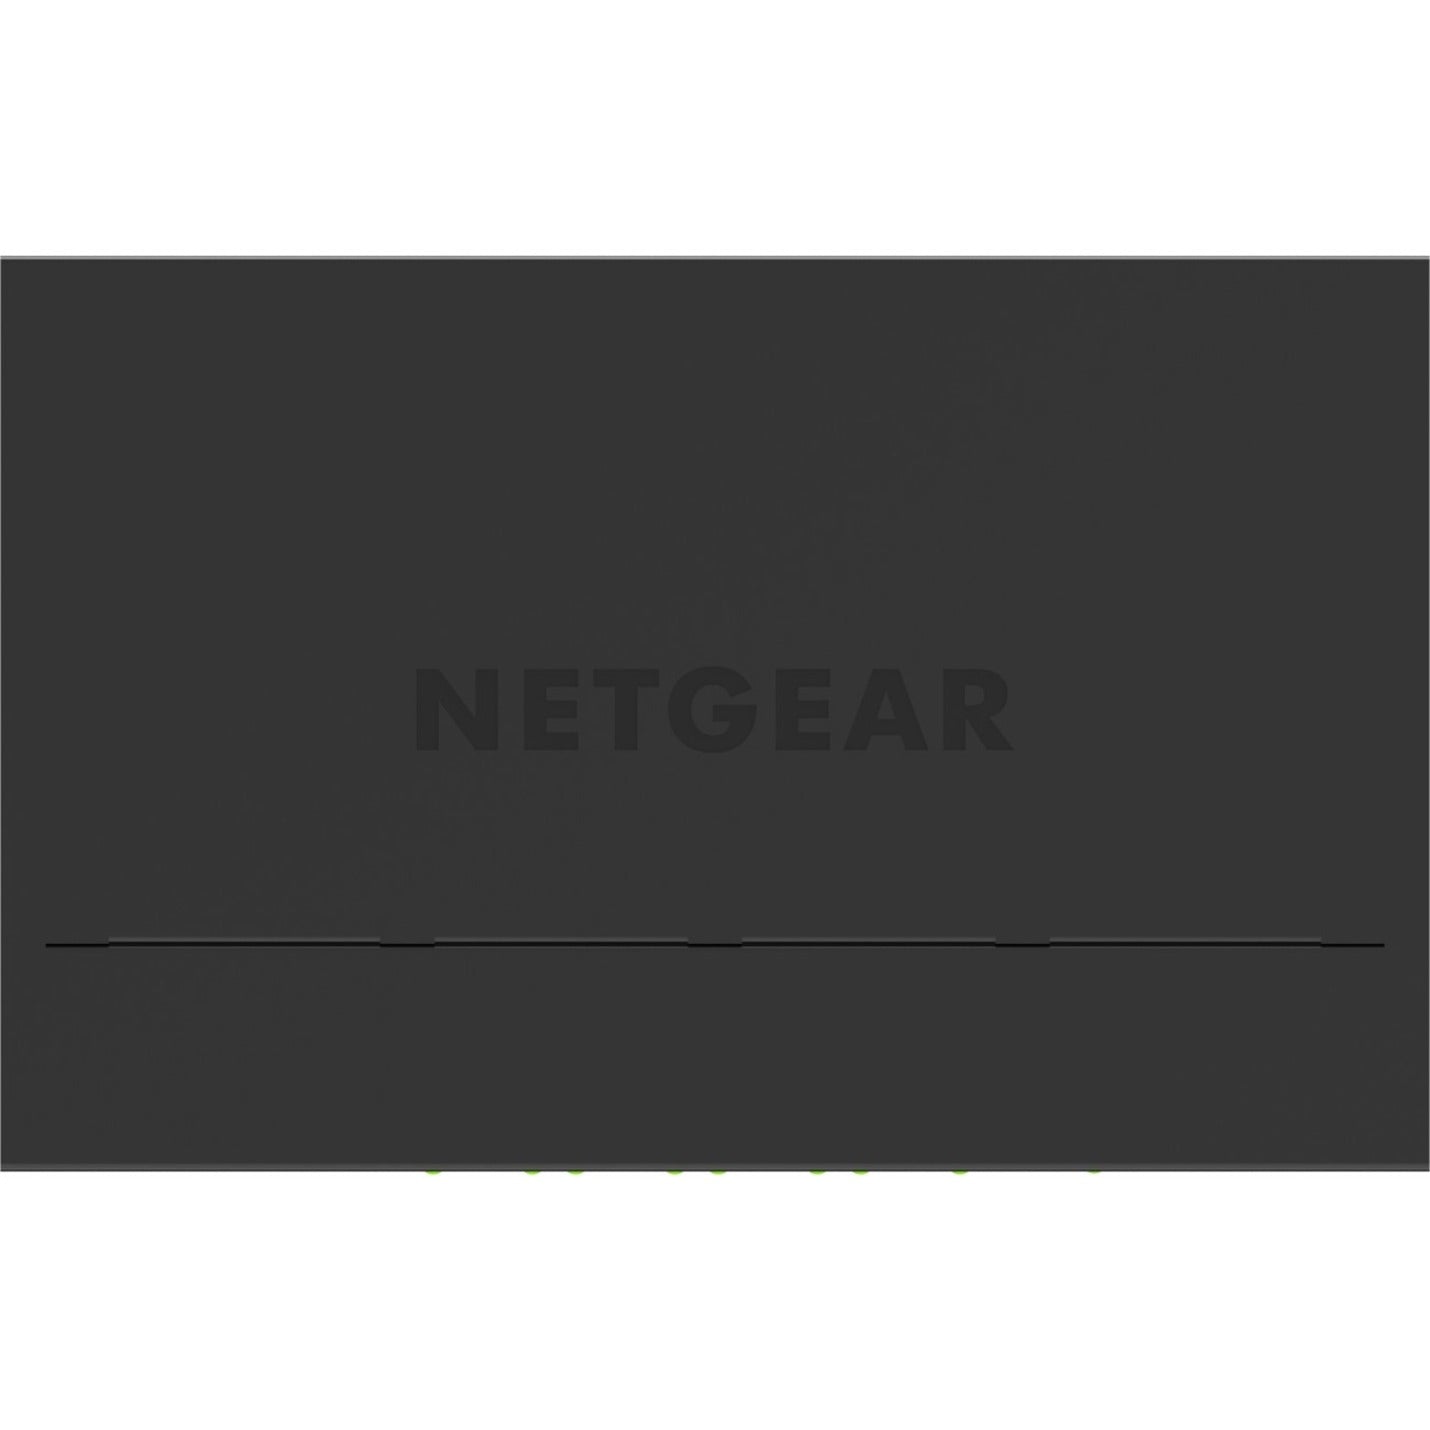 Netgear GS305EPP-100NAS GS305EPP Ethernet Switch 5-Port Gigabit Ethernet PoE+ 120W PoE Budget 